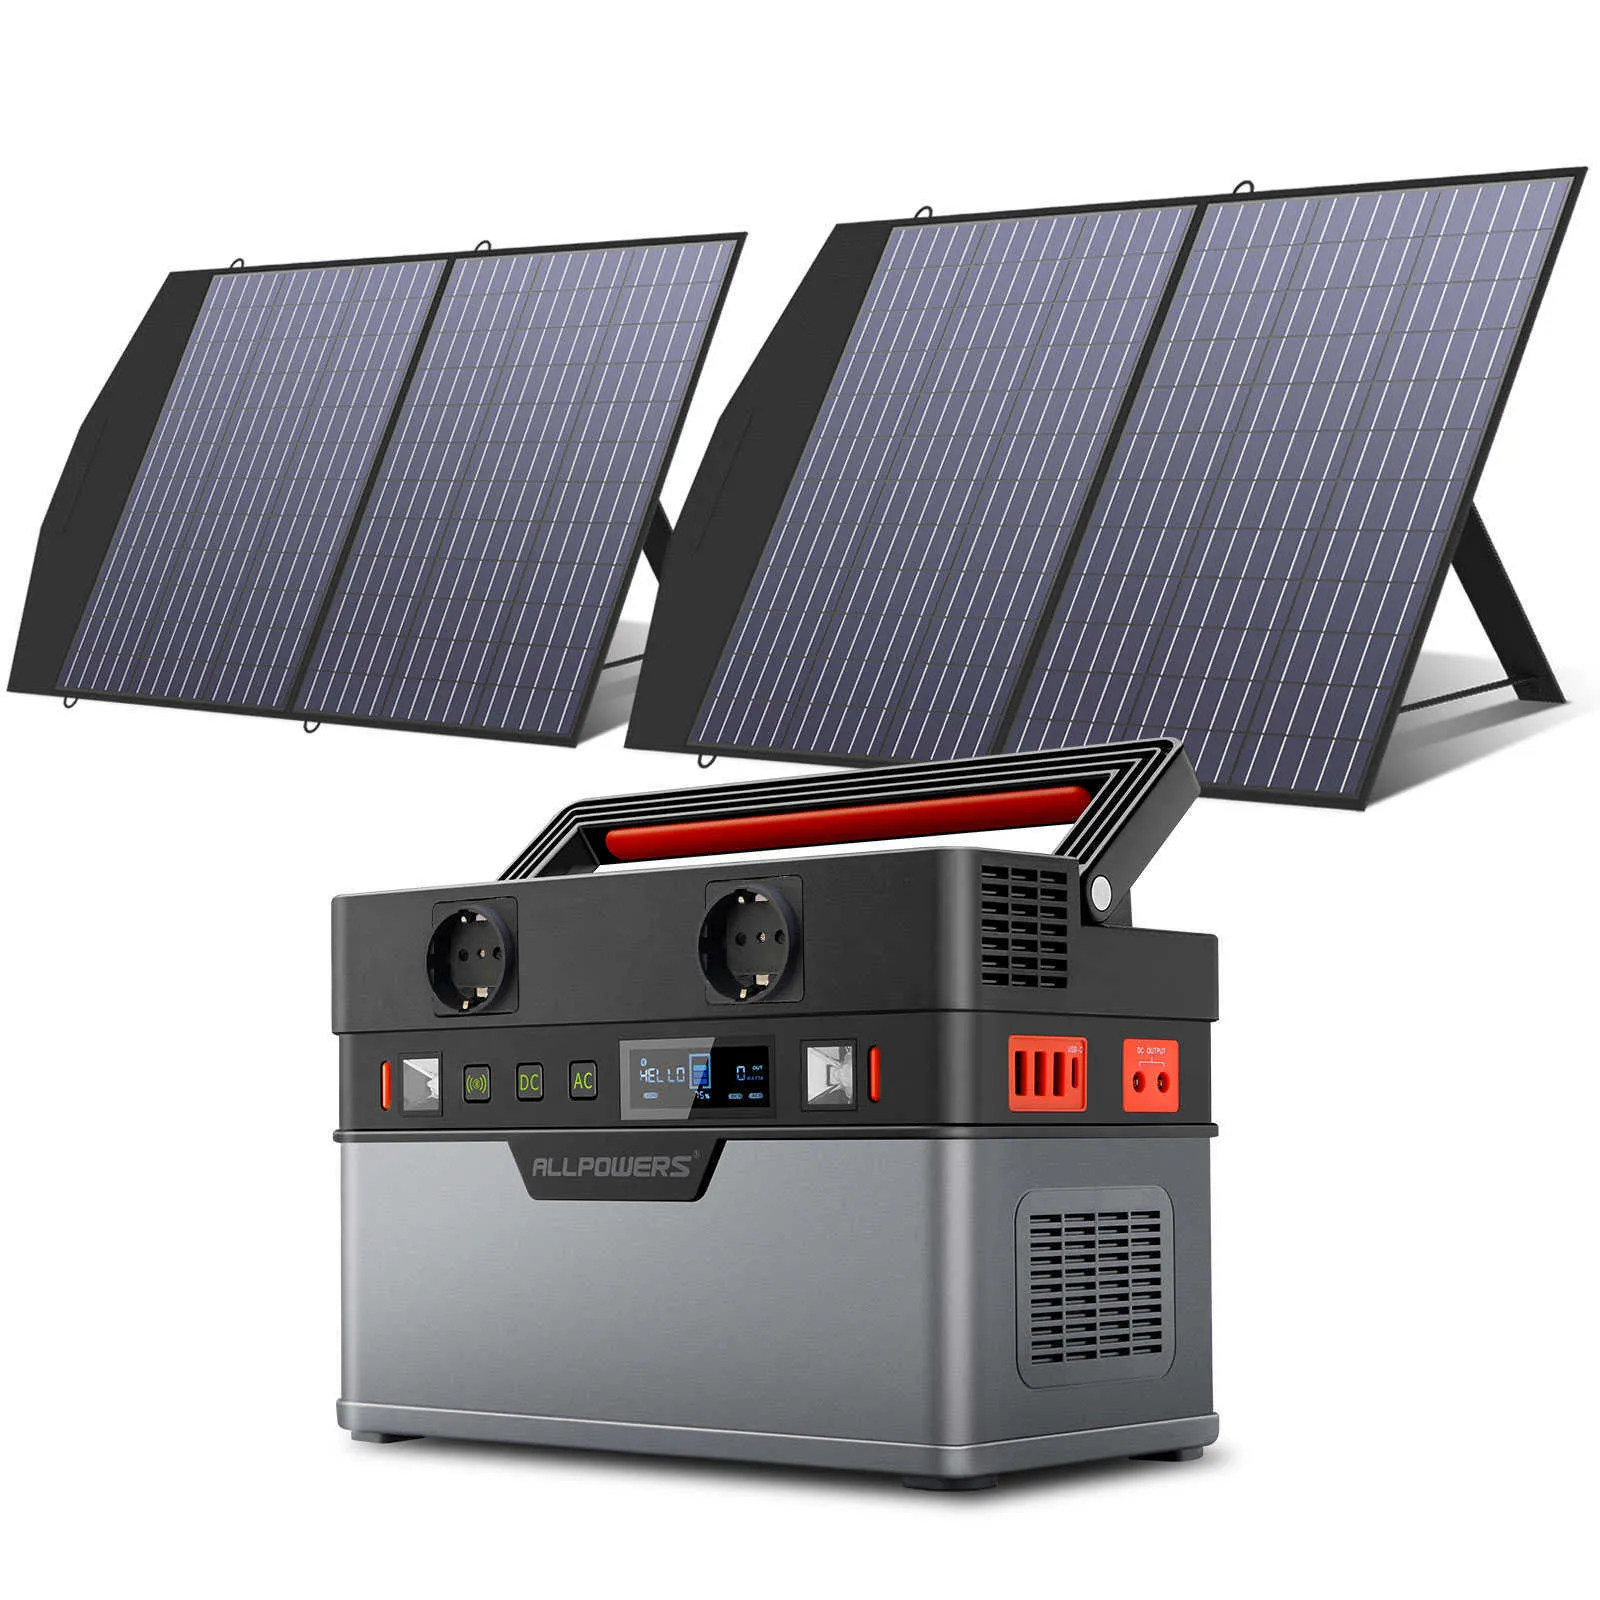 AllPowes Portable Power Station 700W Outdoor Solar Generator Mobile Littium Aquader с складной солнечной панелью 218V100W